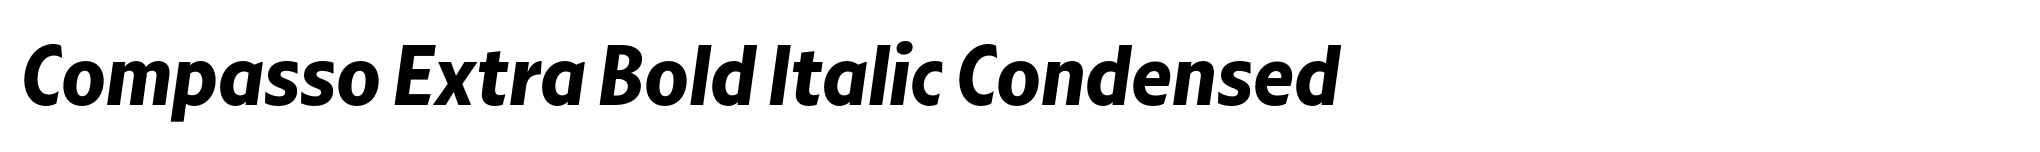 Compasso Extra Bold Italic Condensed image